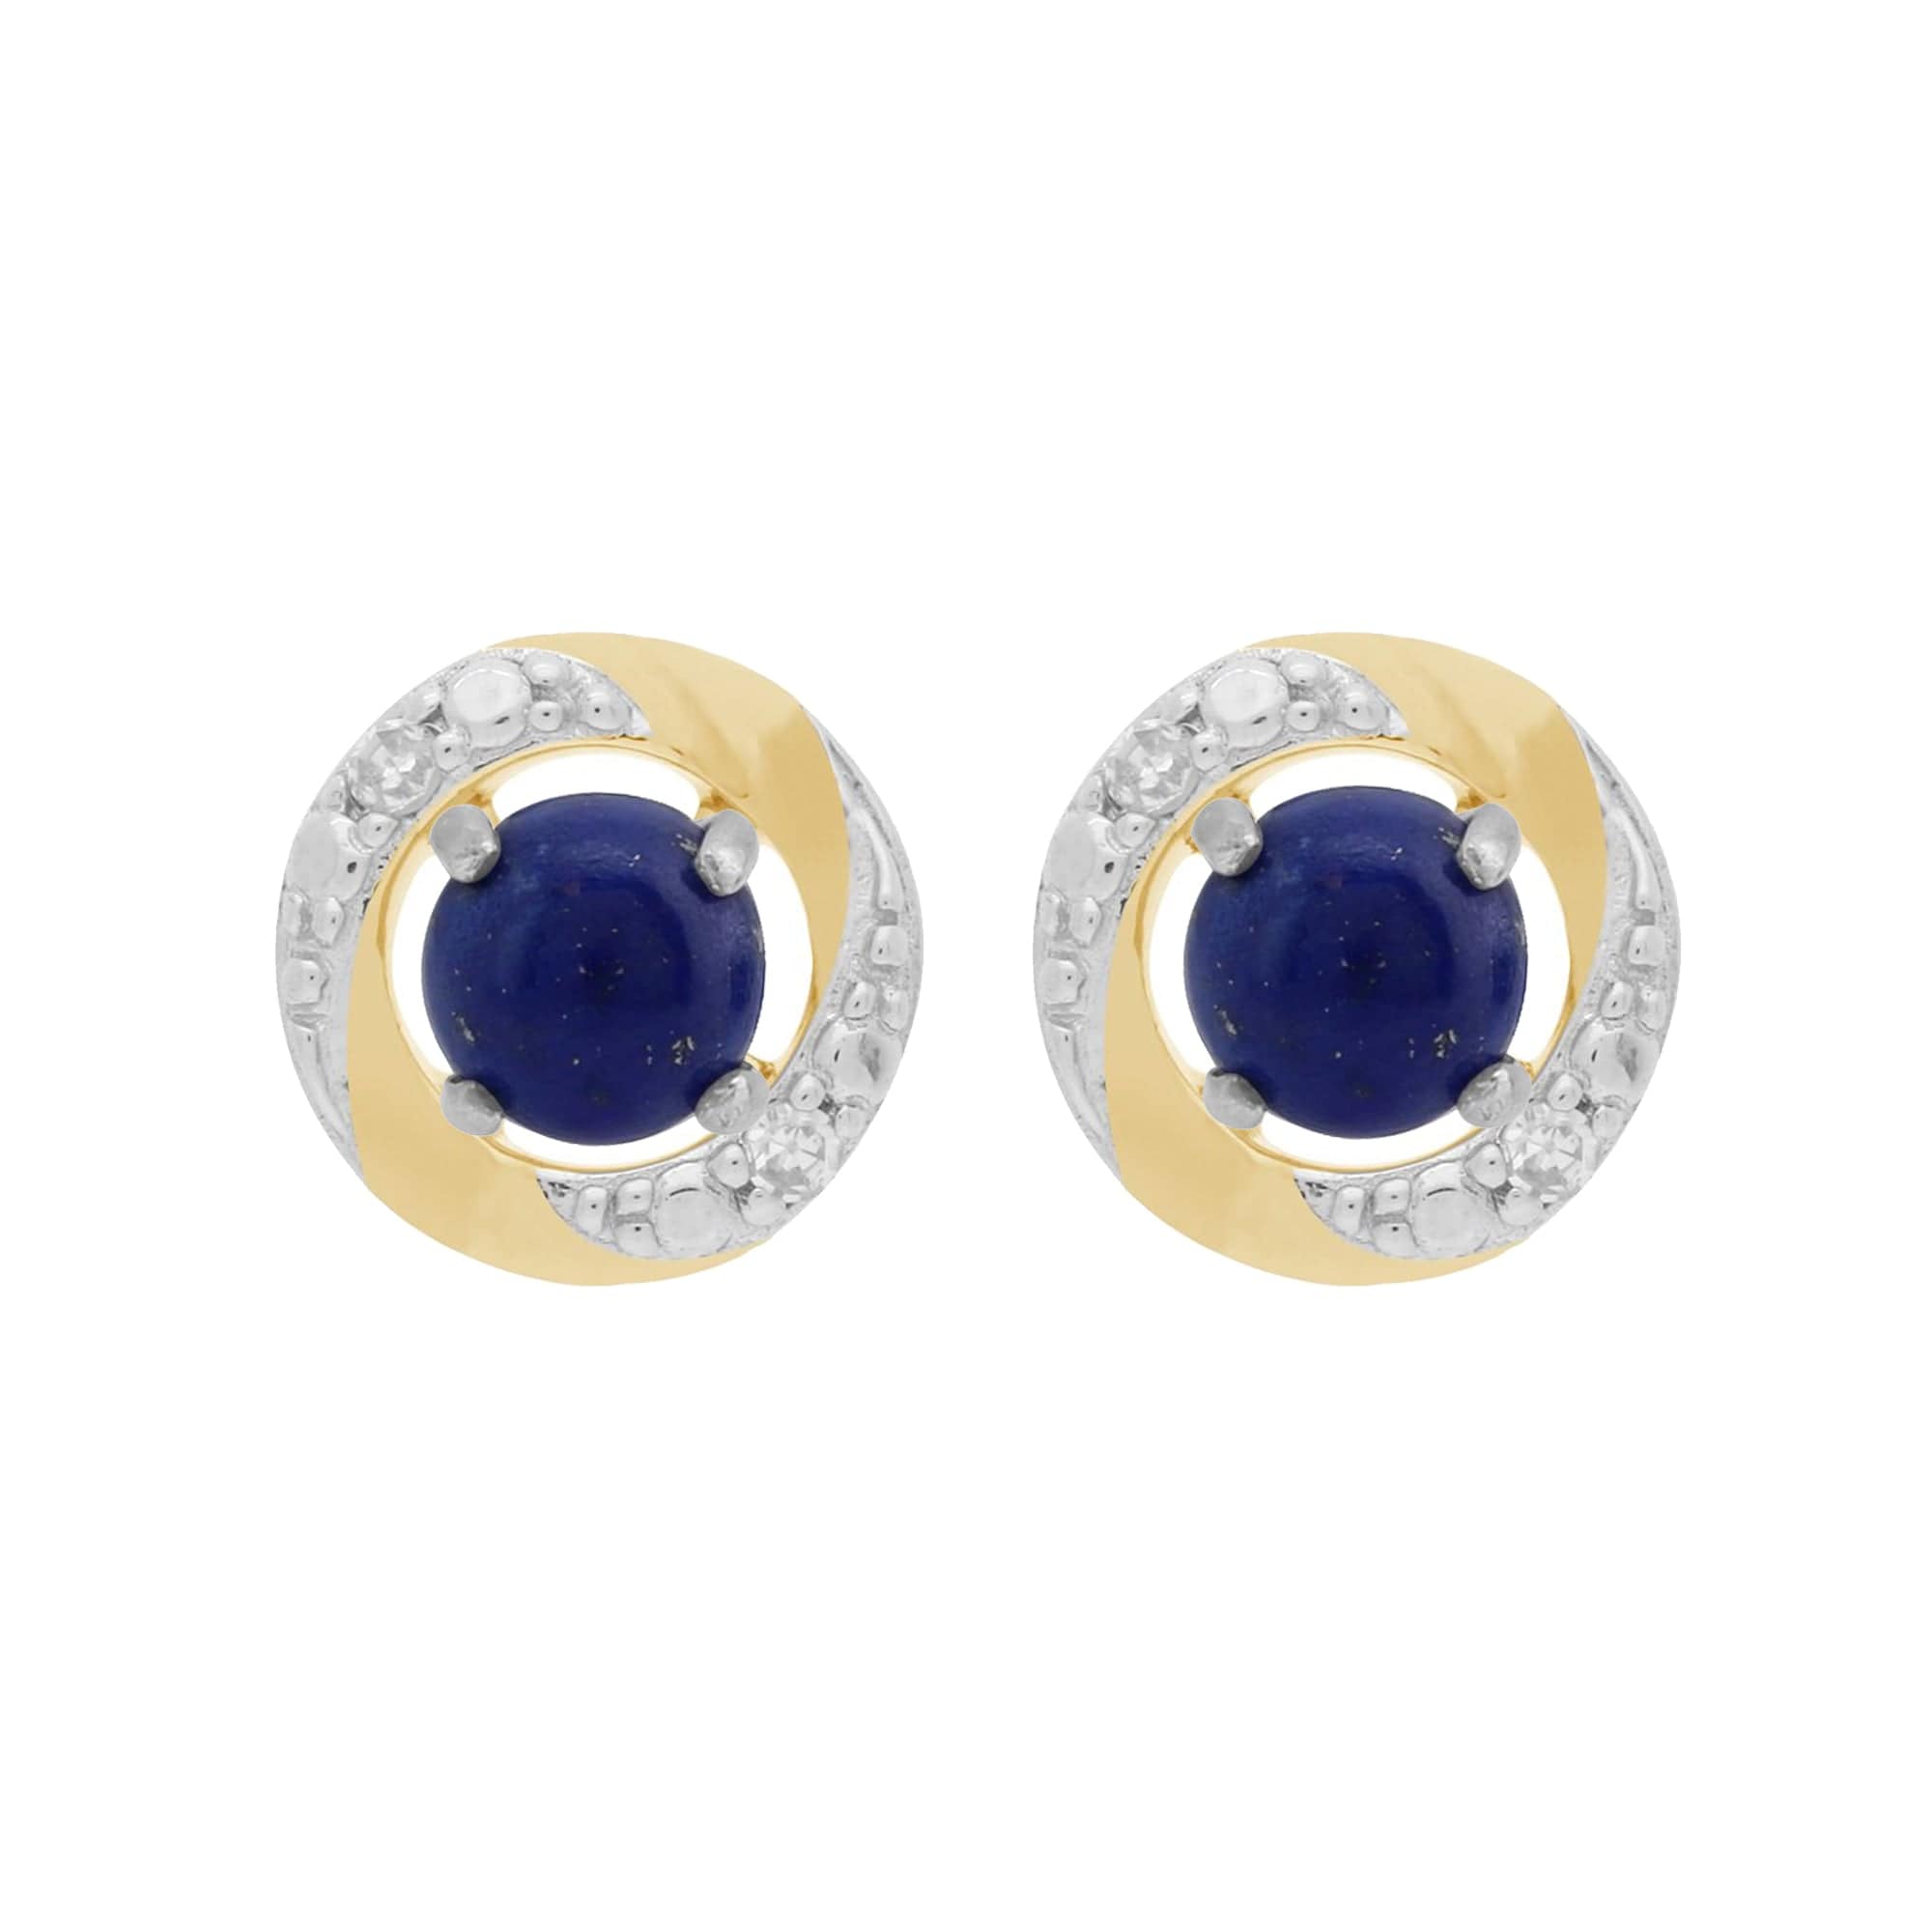 162E0071199-191E0374019 9ct White Gold Lapis Lazuli Stud Earrings with Detachable Diamond Halo Ear Jacket in 9ct Yellow Gold 1